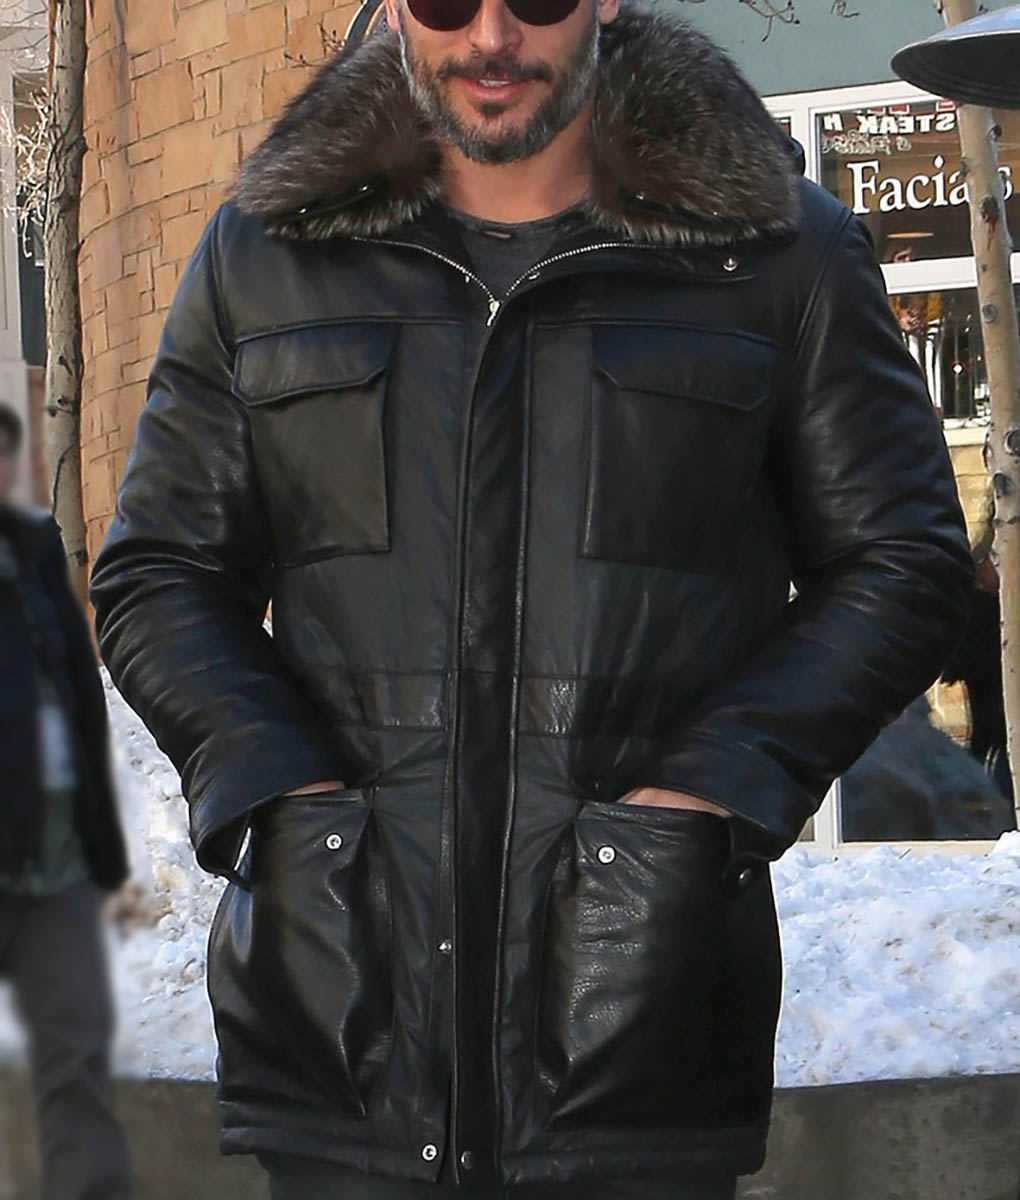 Joe Manganiello Sundance Film Festival 2014 Black Leather Jacket